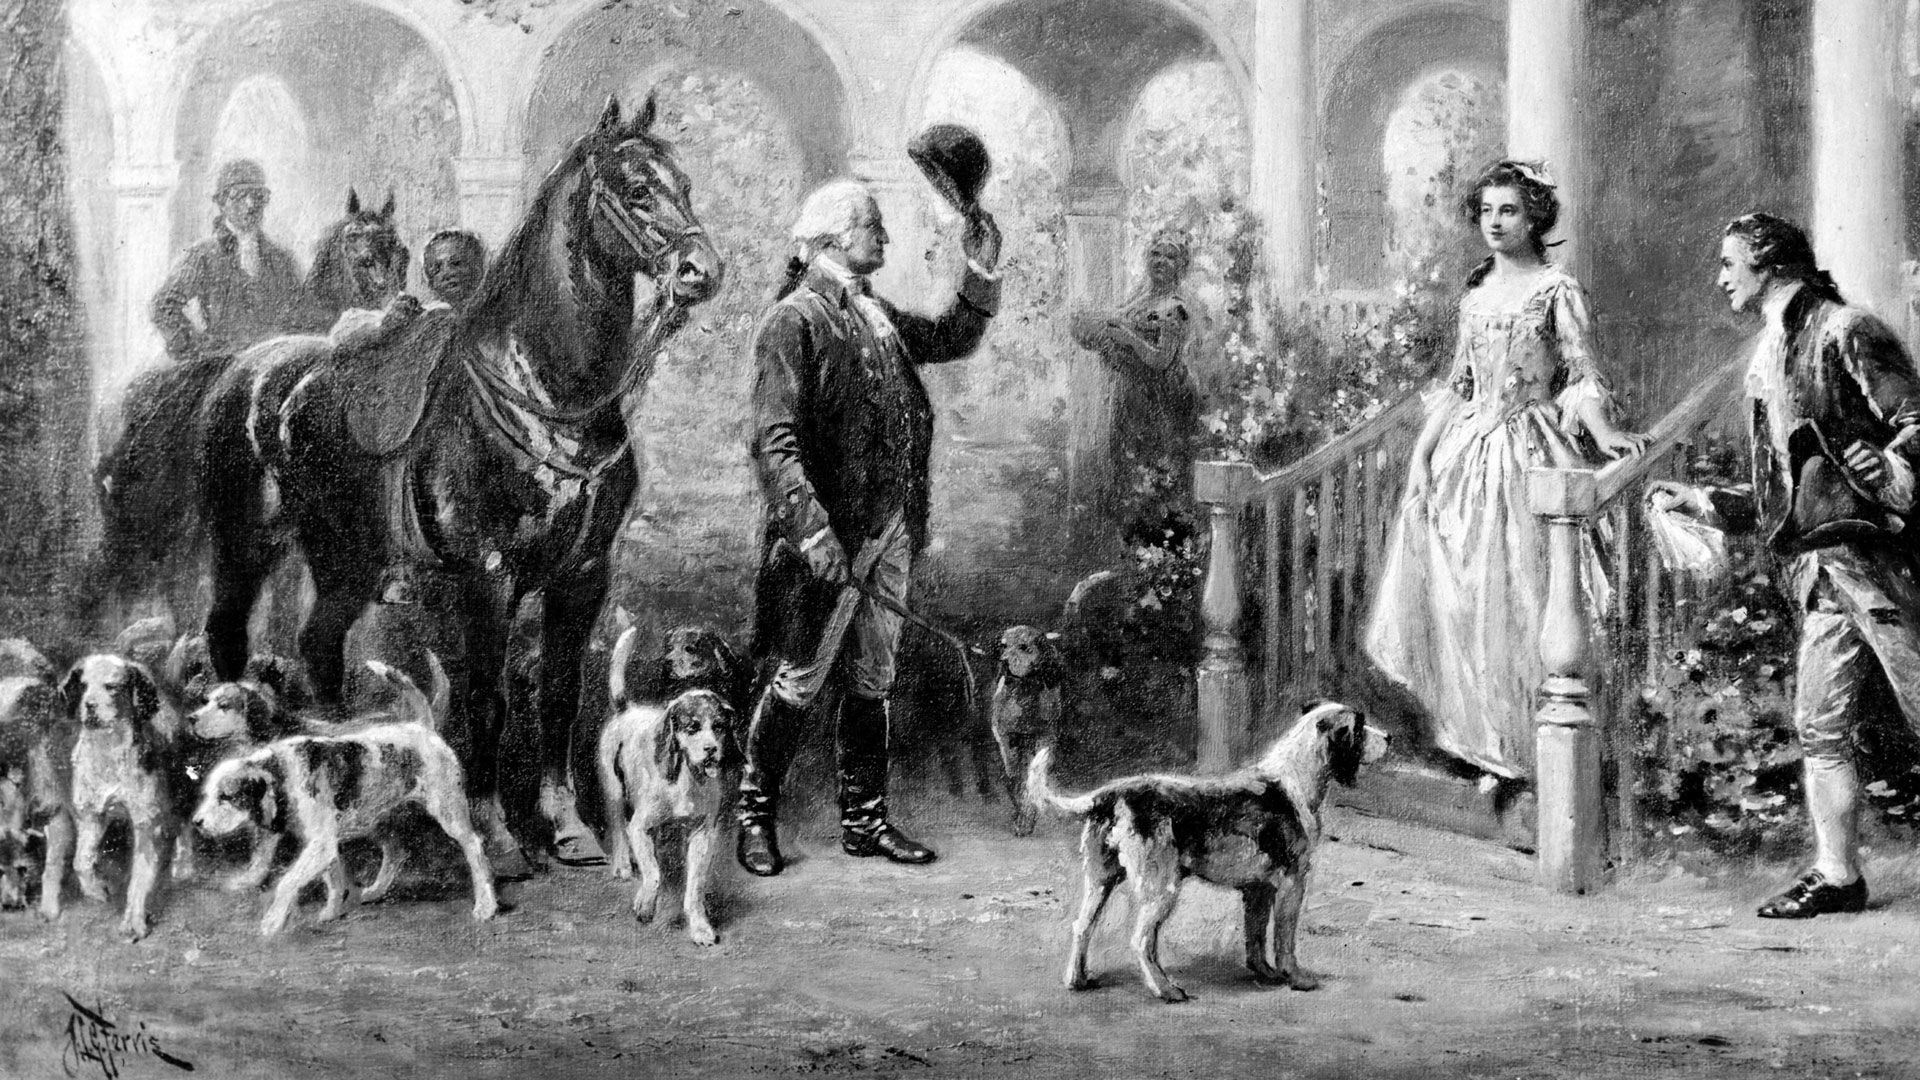 Read More: George Washington the Passionate Dog Breeder